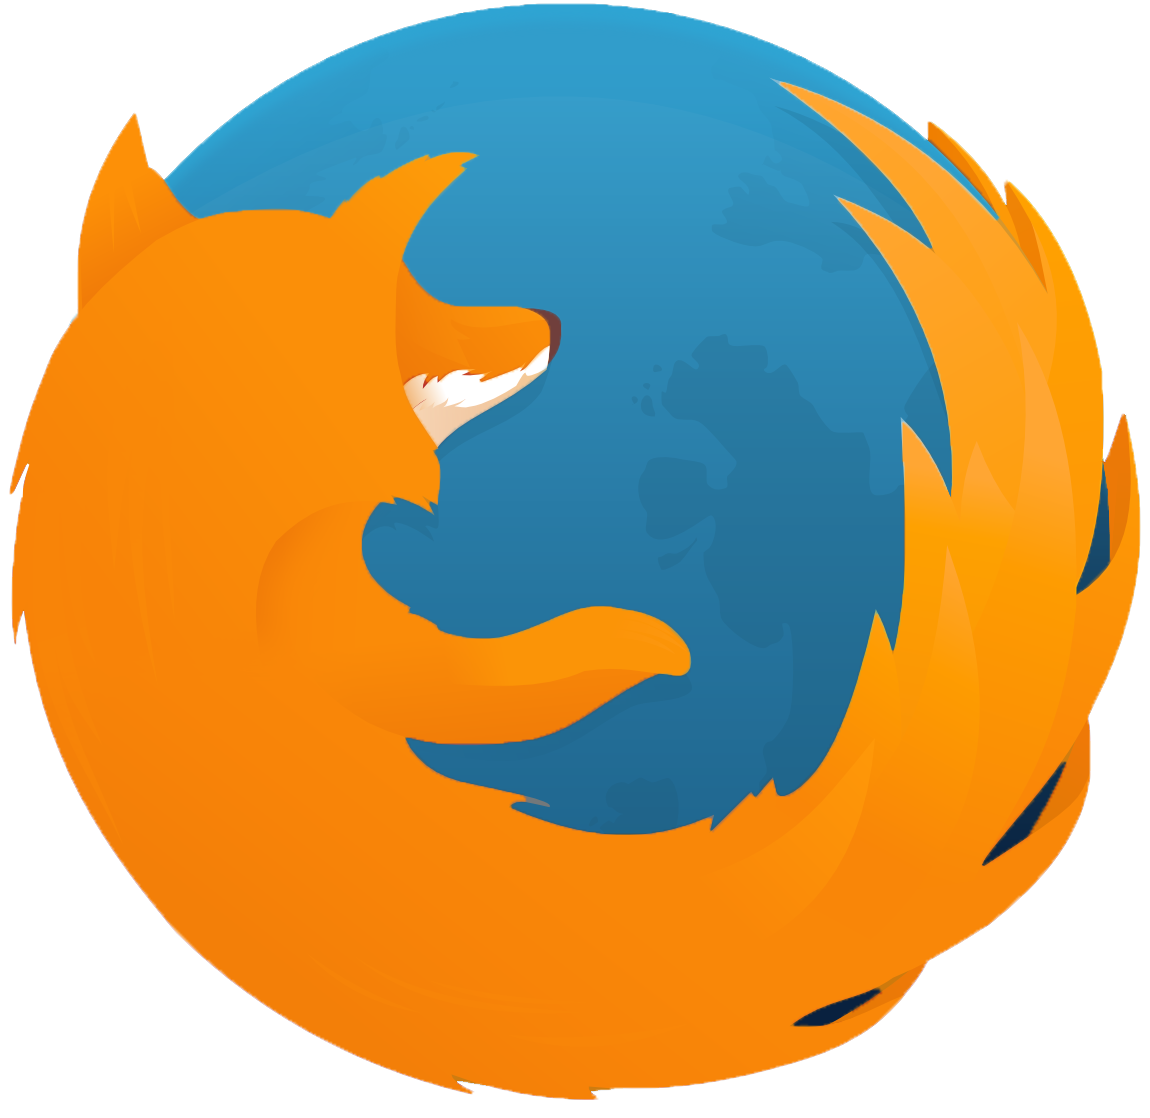 Logotipo do Firefox